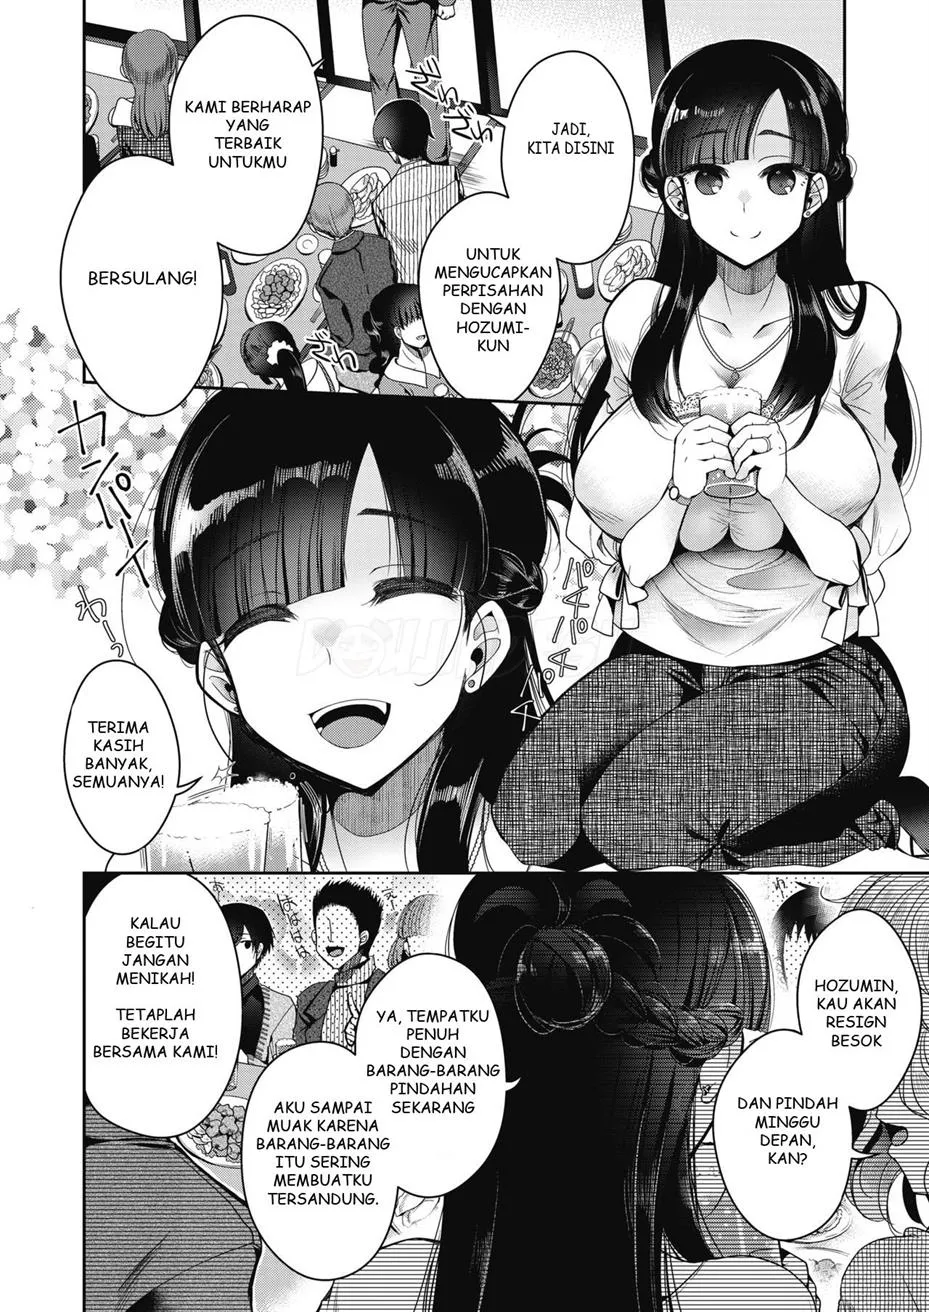 Manga adult sub indo